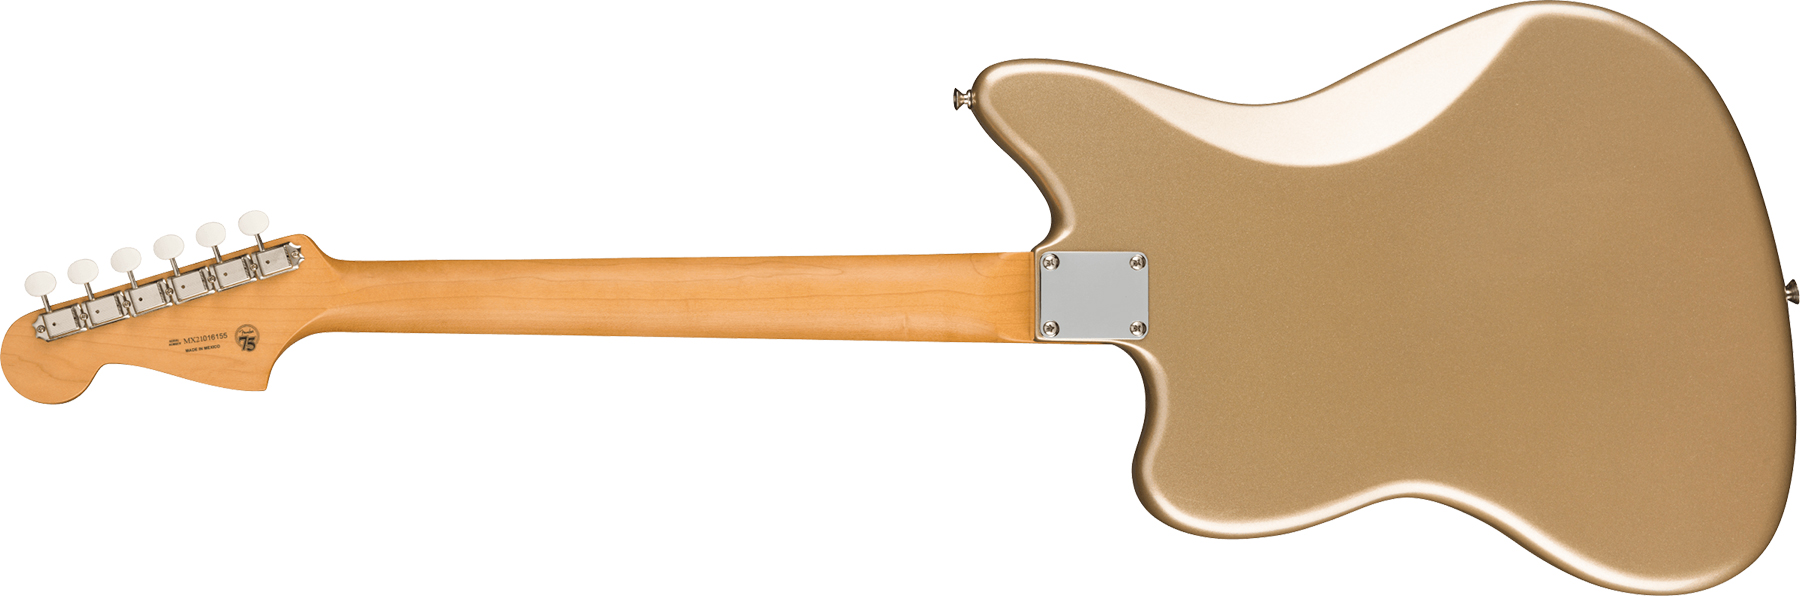 Fender Jazzmaster Gold Foil Ltd Mex 3mh Trem Bigsby Eb - Shoreline Gold - Retro-rock elektrische gitaar - Variation 1